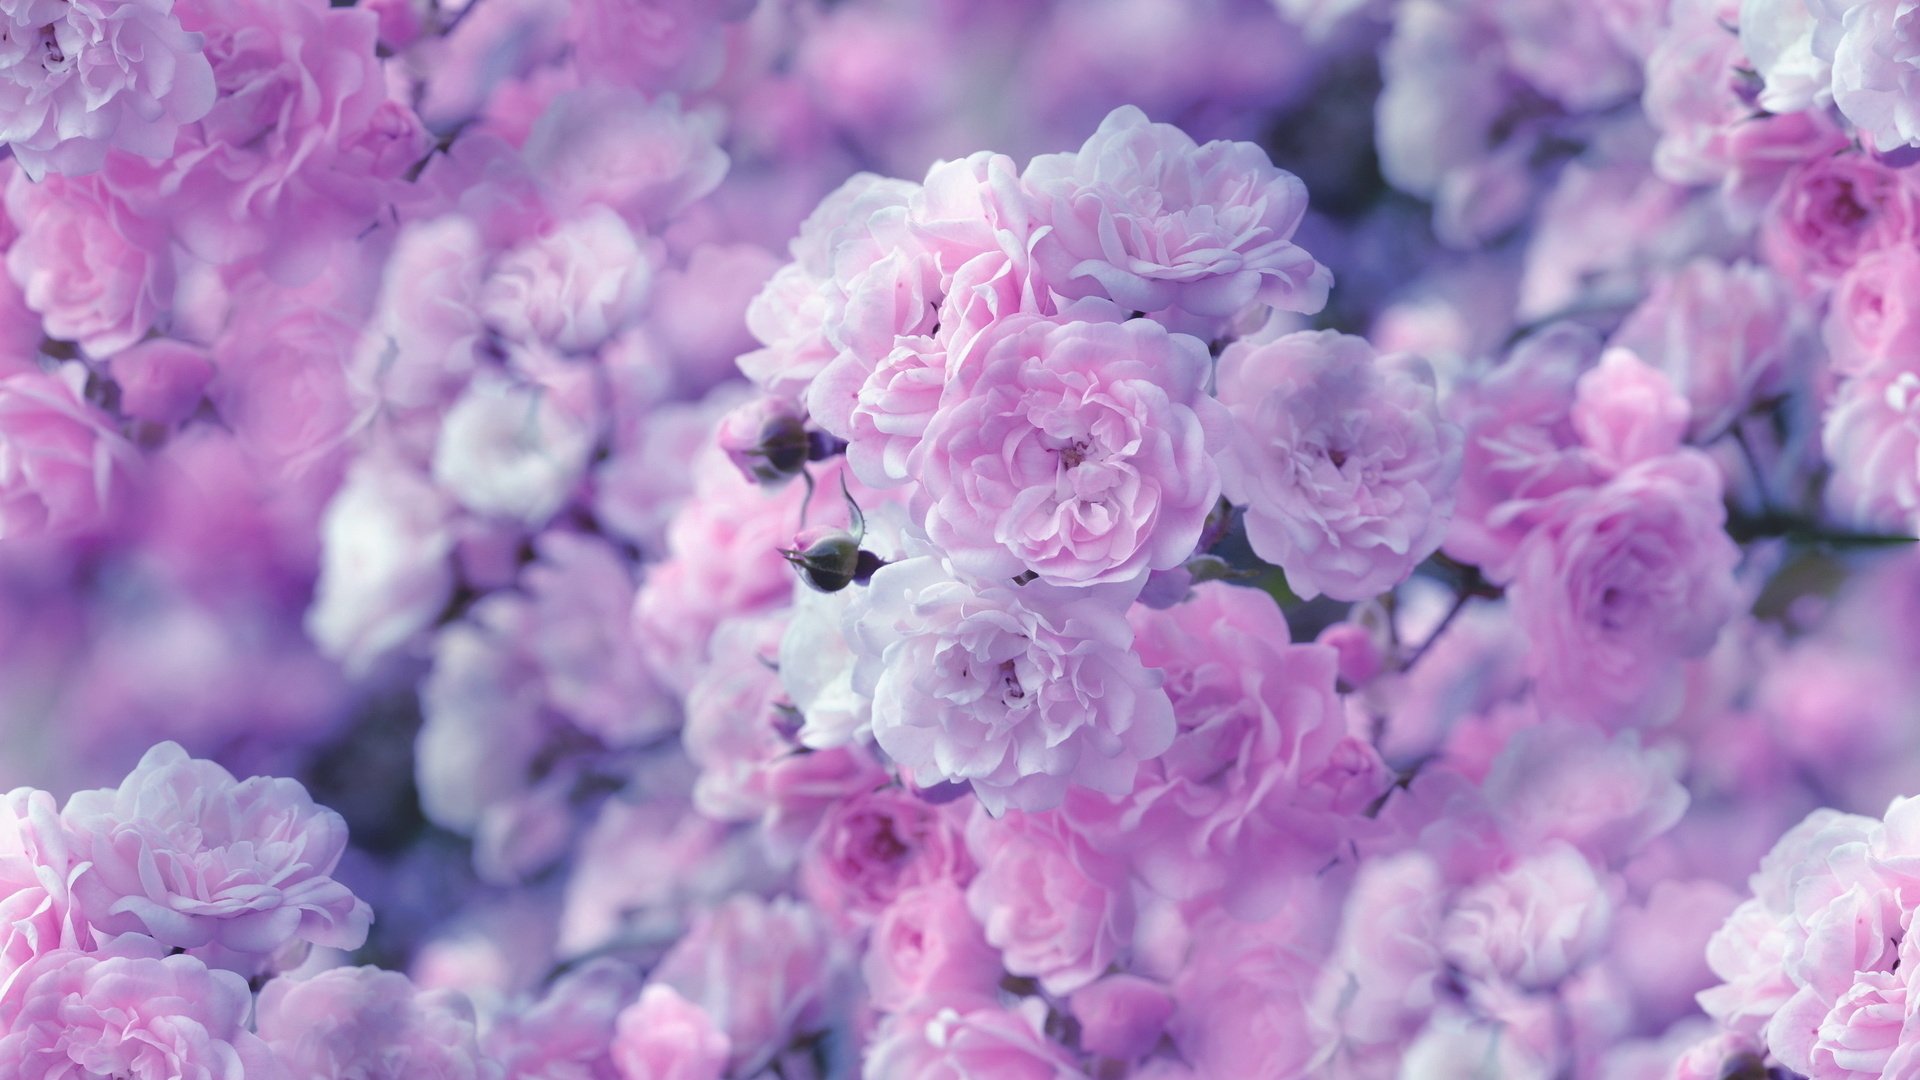 pastel roses wallpaper,flower,pink,violet,purple,petal